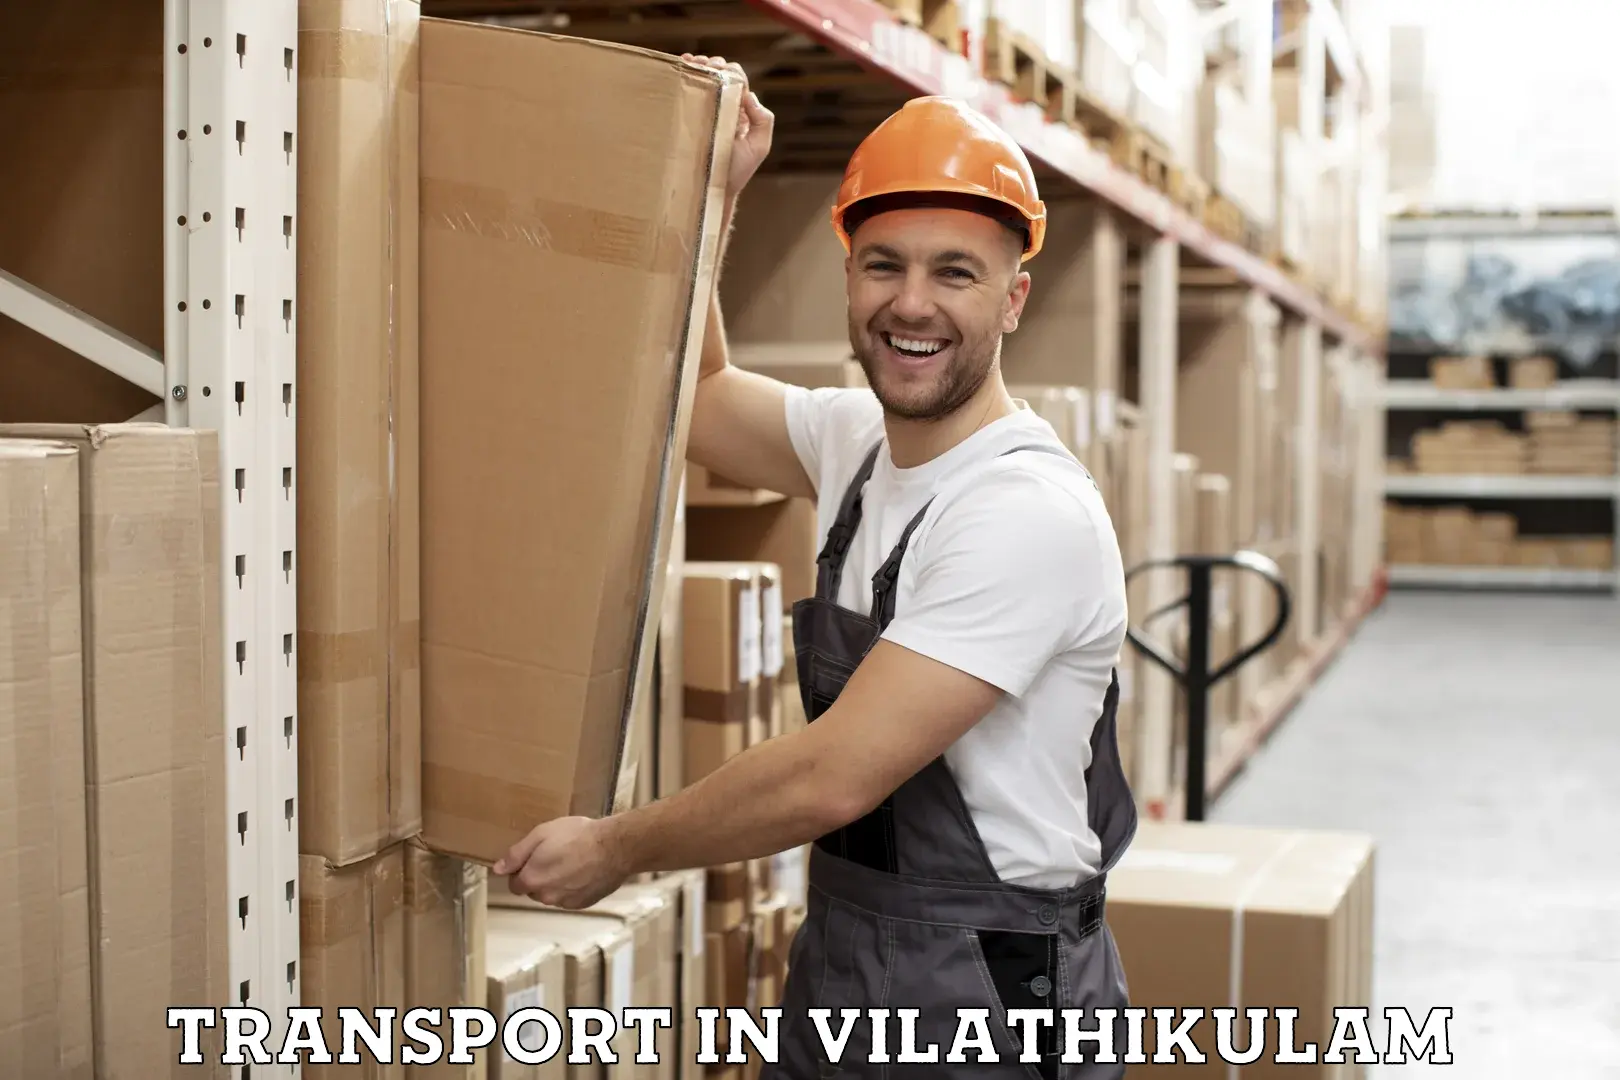 Transport in sharing in Vilathikulam